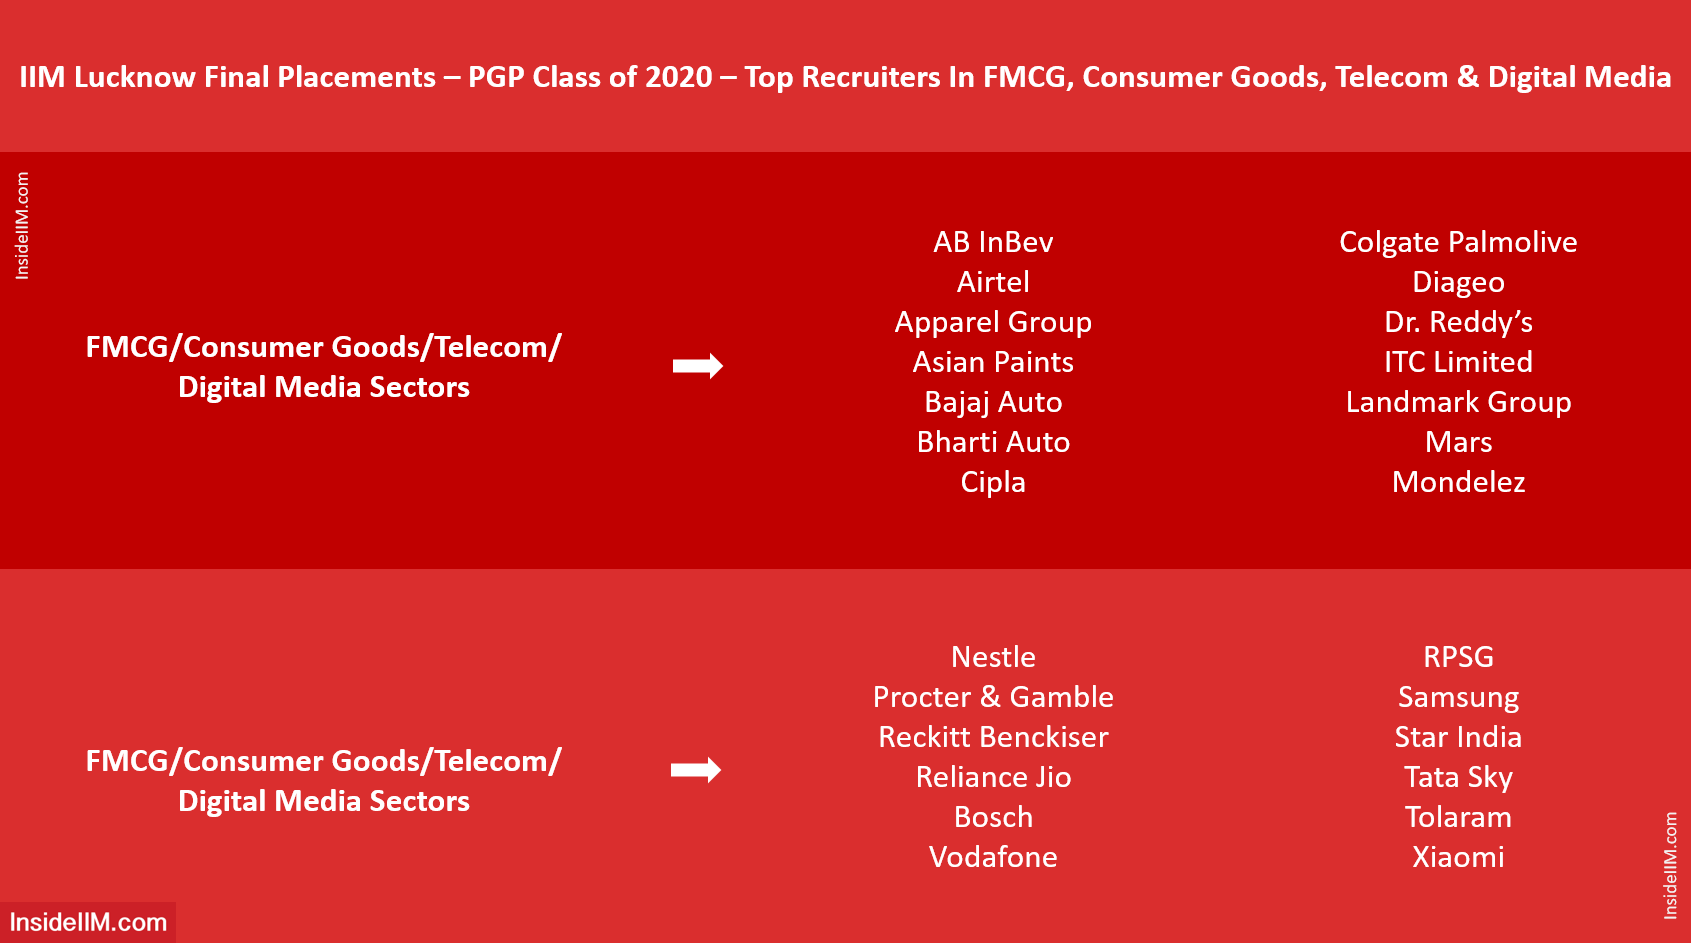 IIM Lucknow Final Placements 2020 - Top FMCG Recruiters